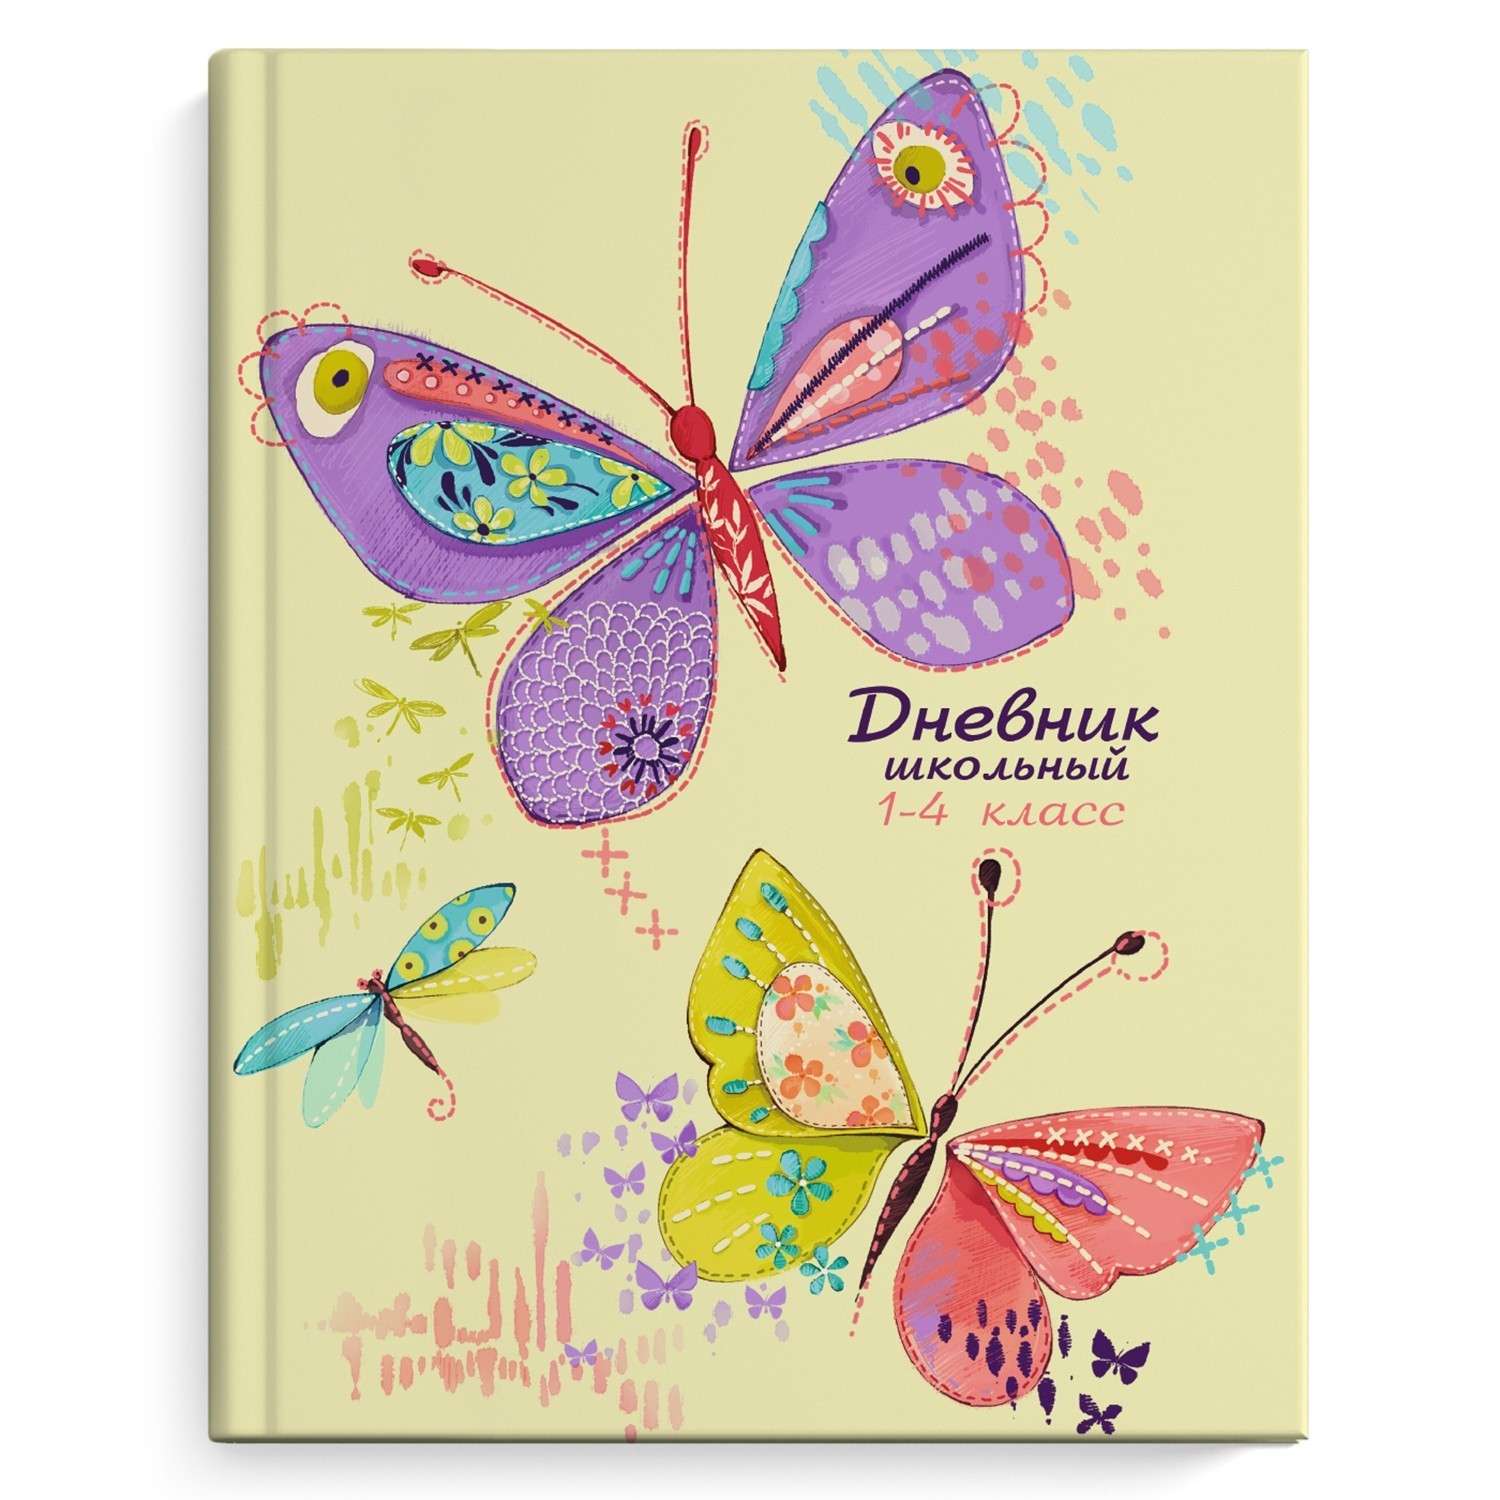 Дневник Феникс + Цвет Бабочки 1-4класс - фото 1